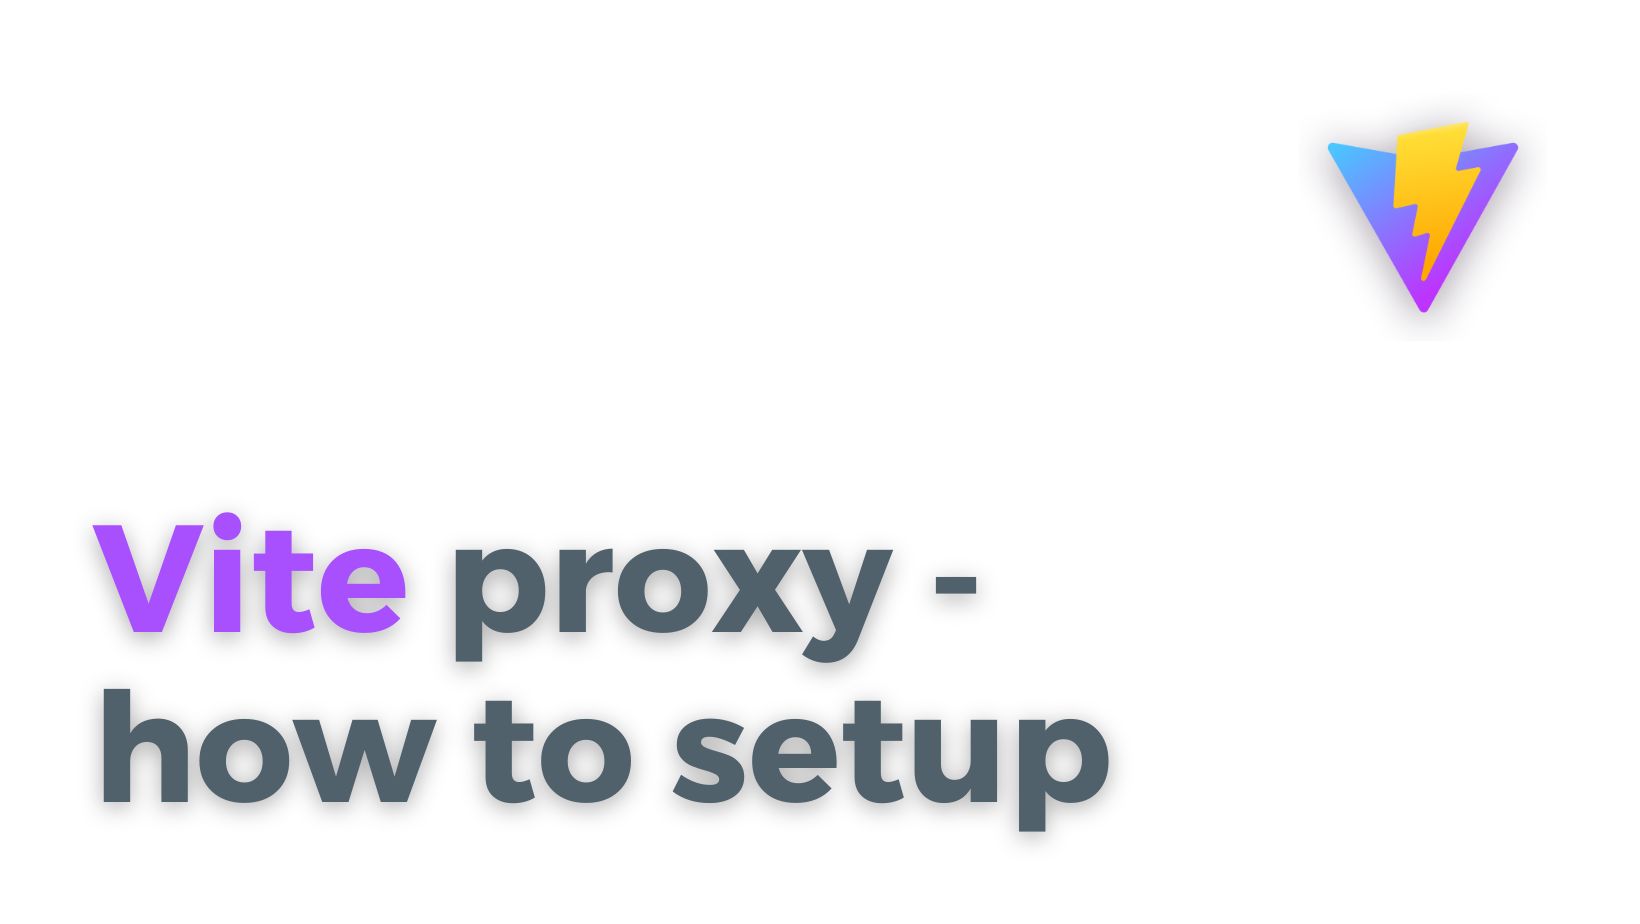 Vite proxy - how to setup